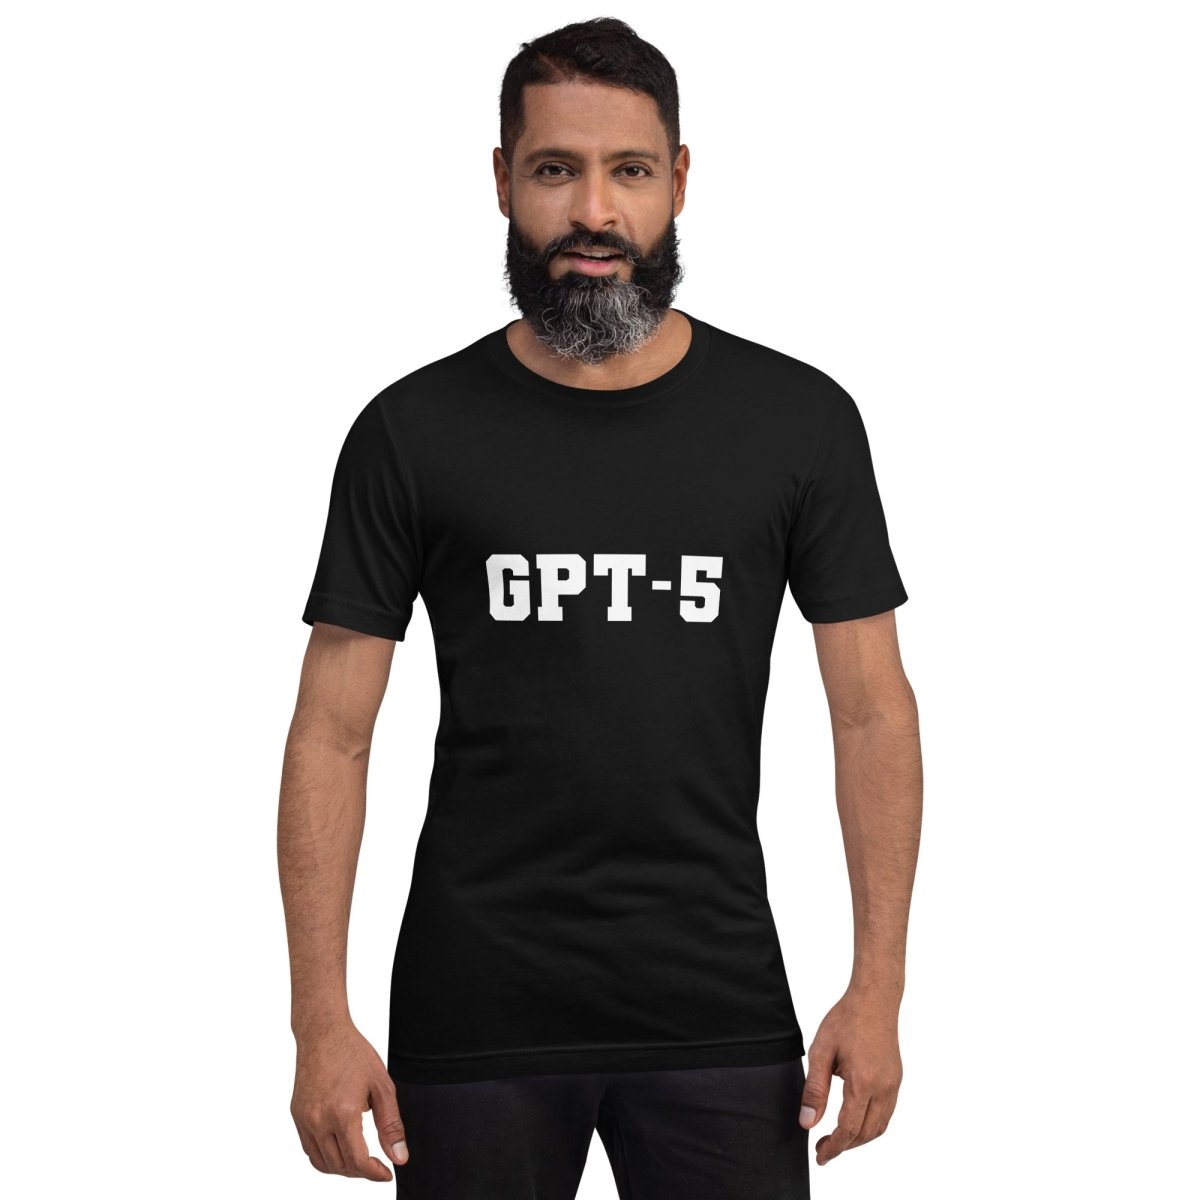 GPT - 5 T - Shirt 3 (unisex) - Black - AI Store